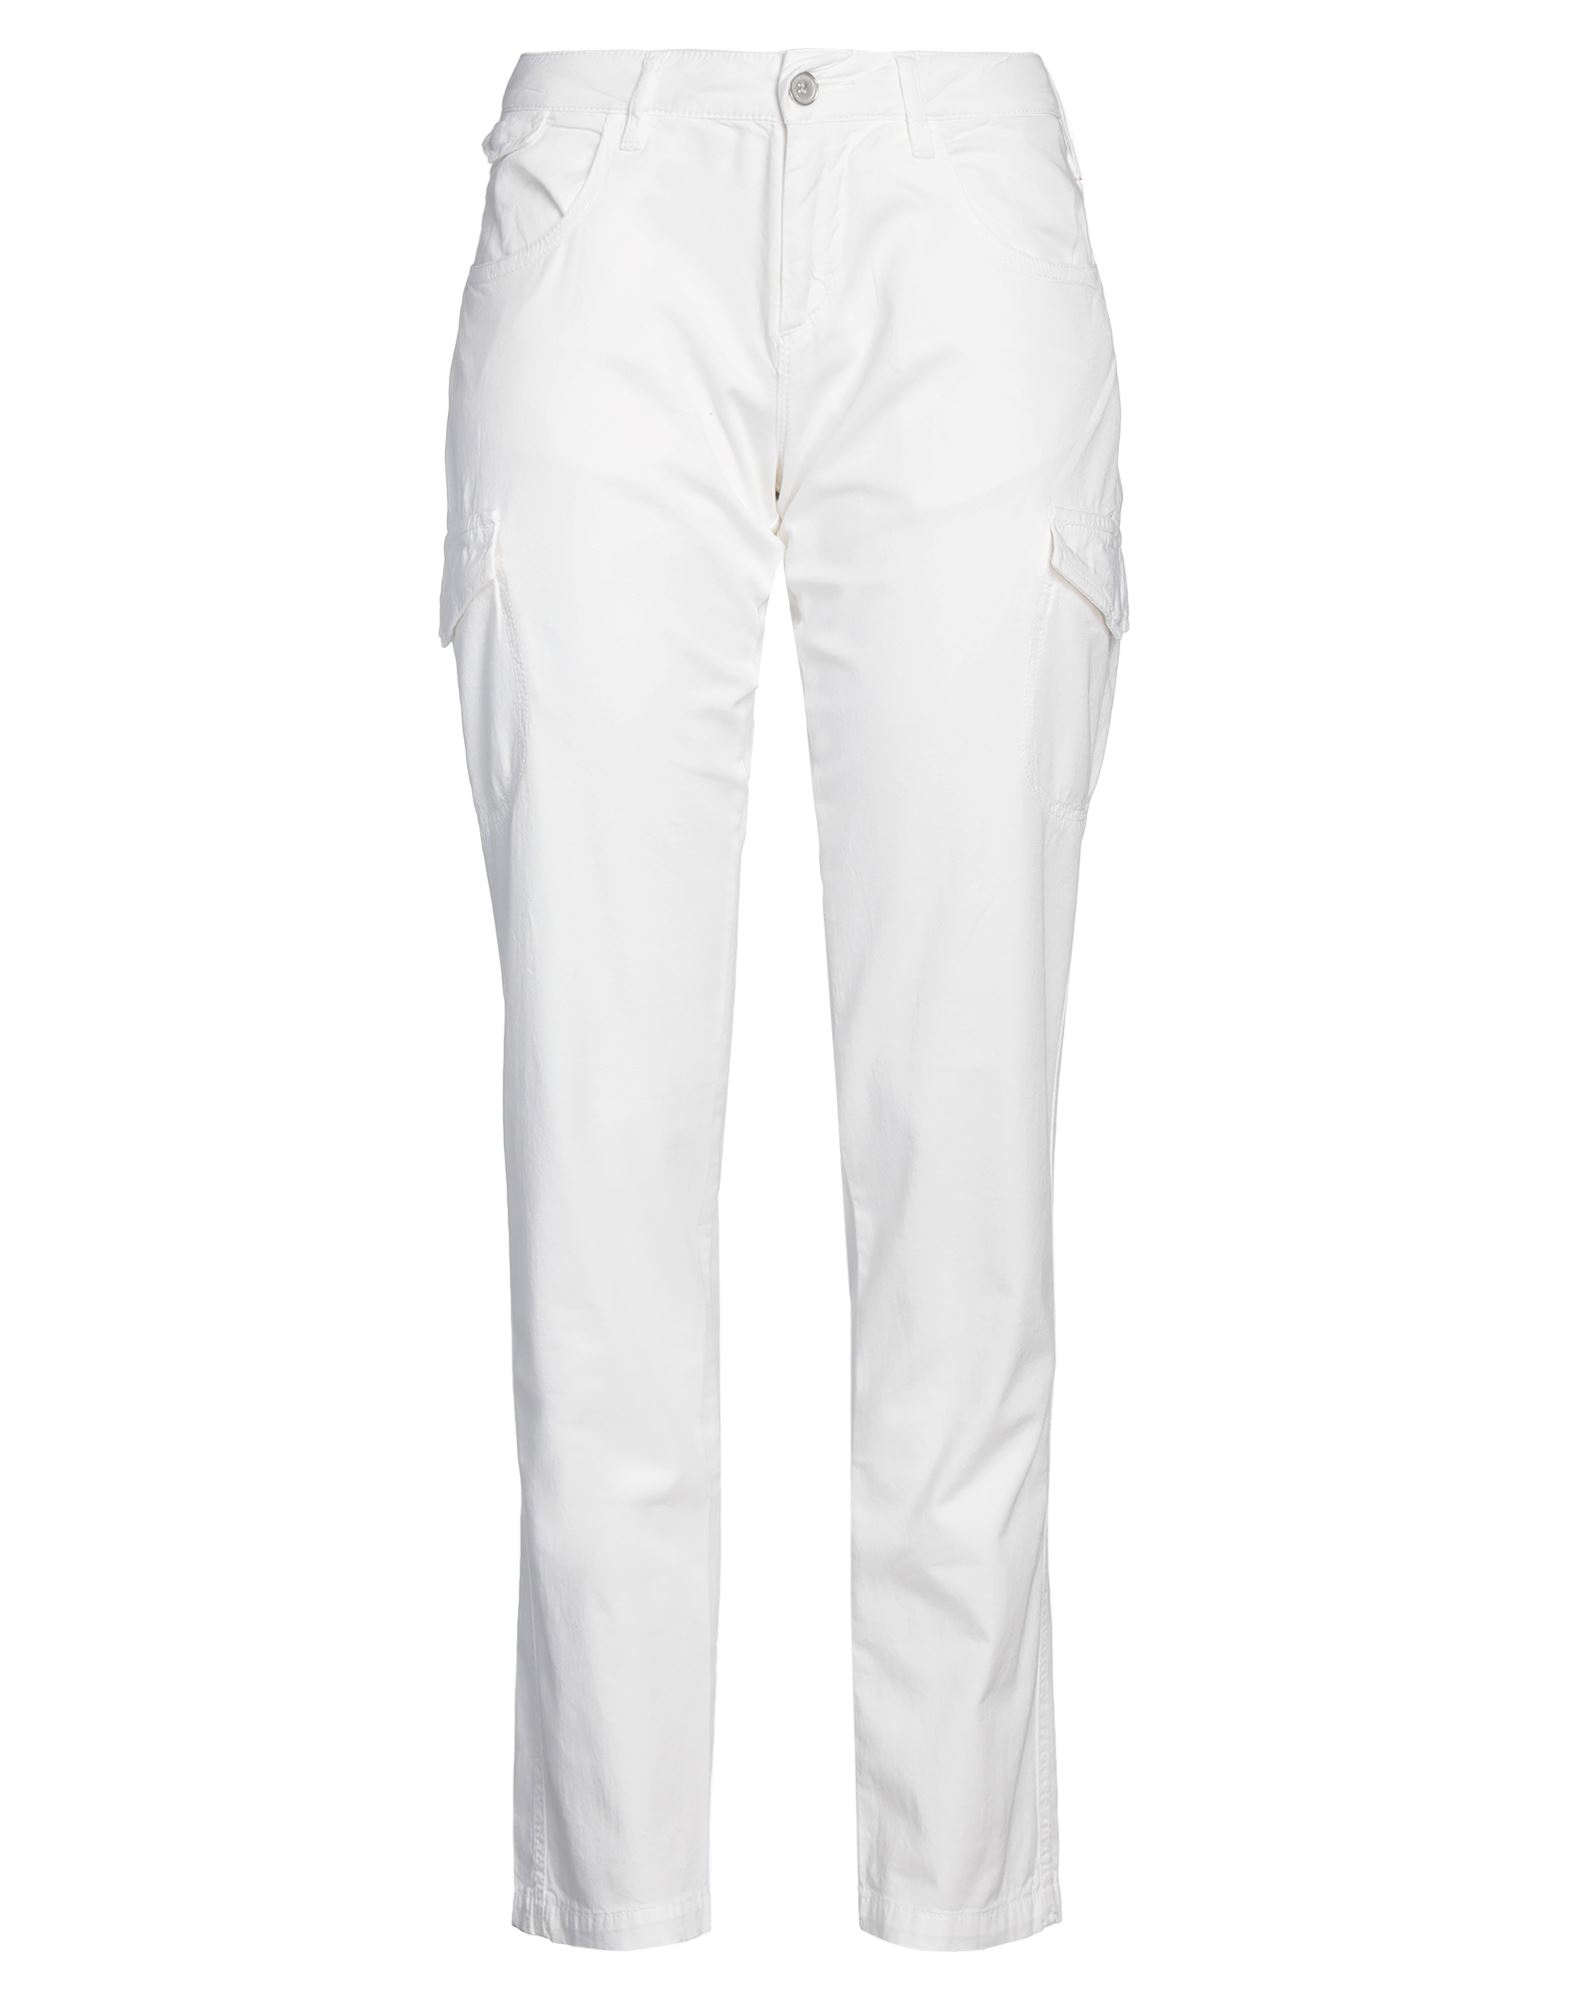 Murphy & Nye Pants In White